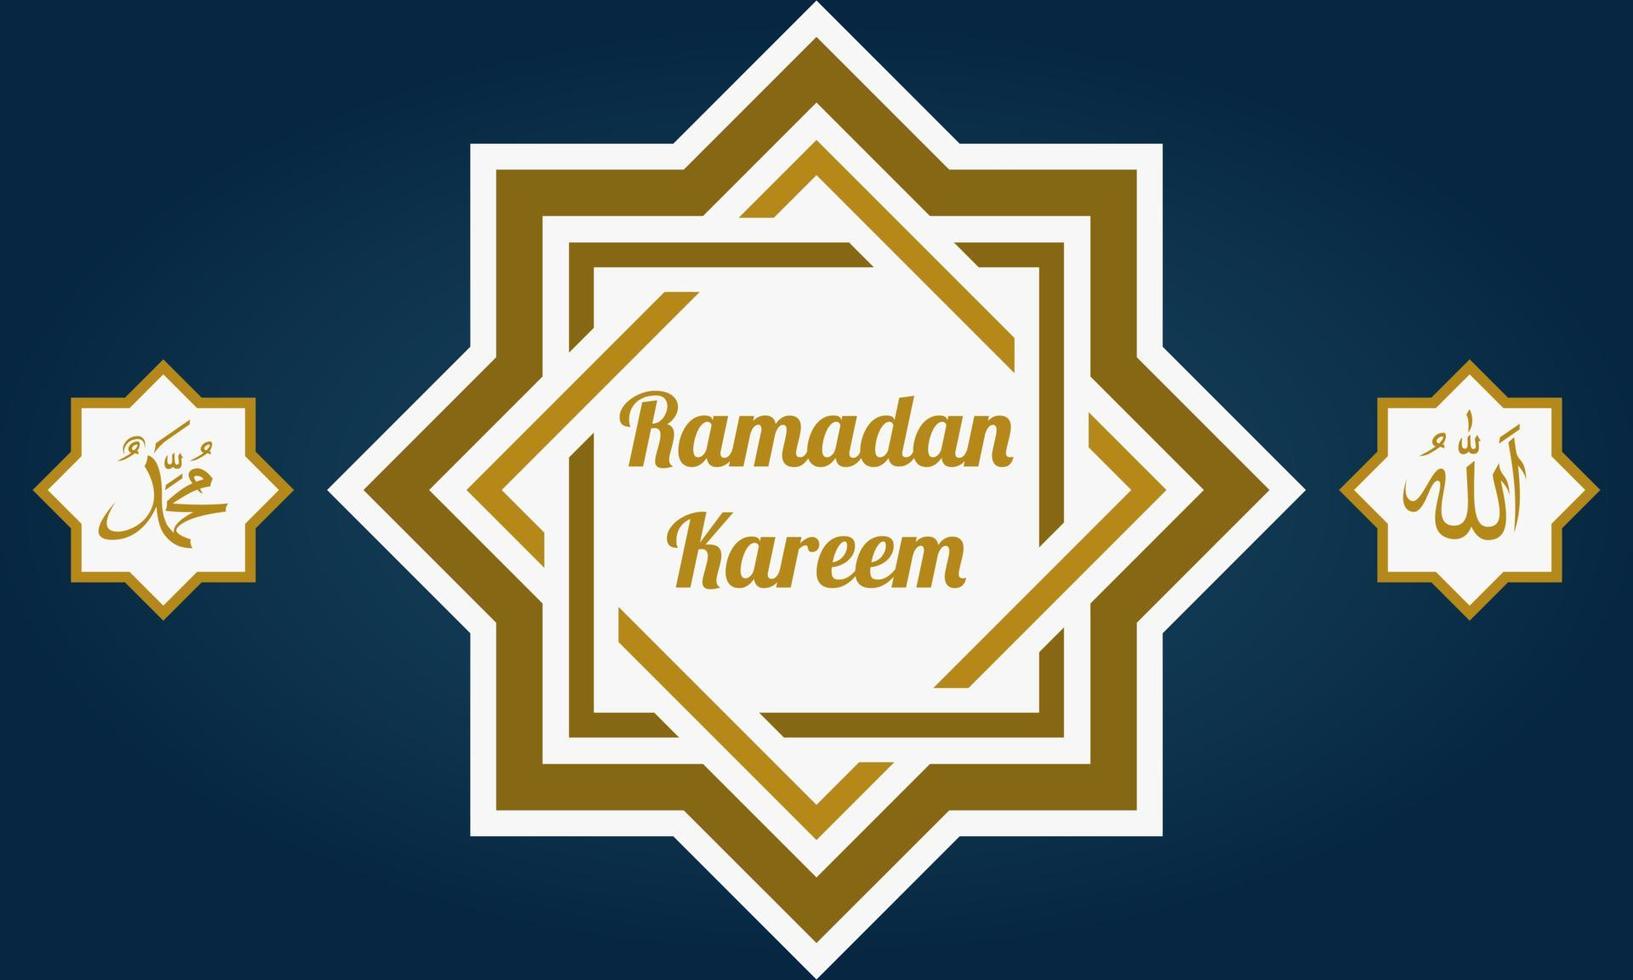 Ramadan Kareem design template with Islamic ornaments vector